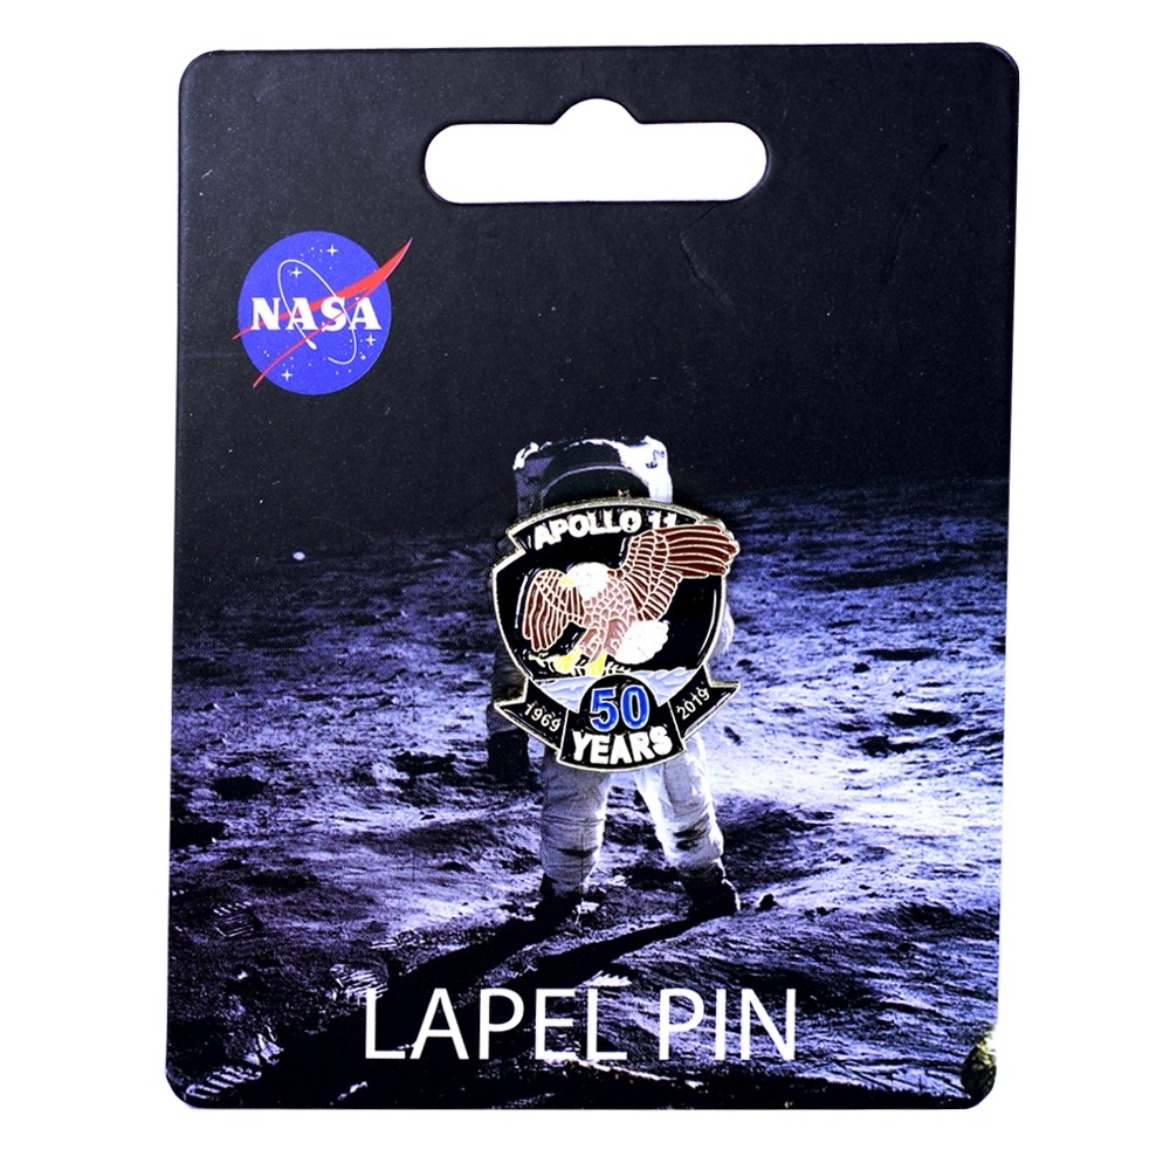 Genuine NASA Lapel Pin £3.50